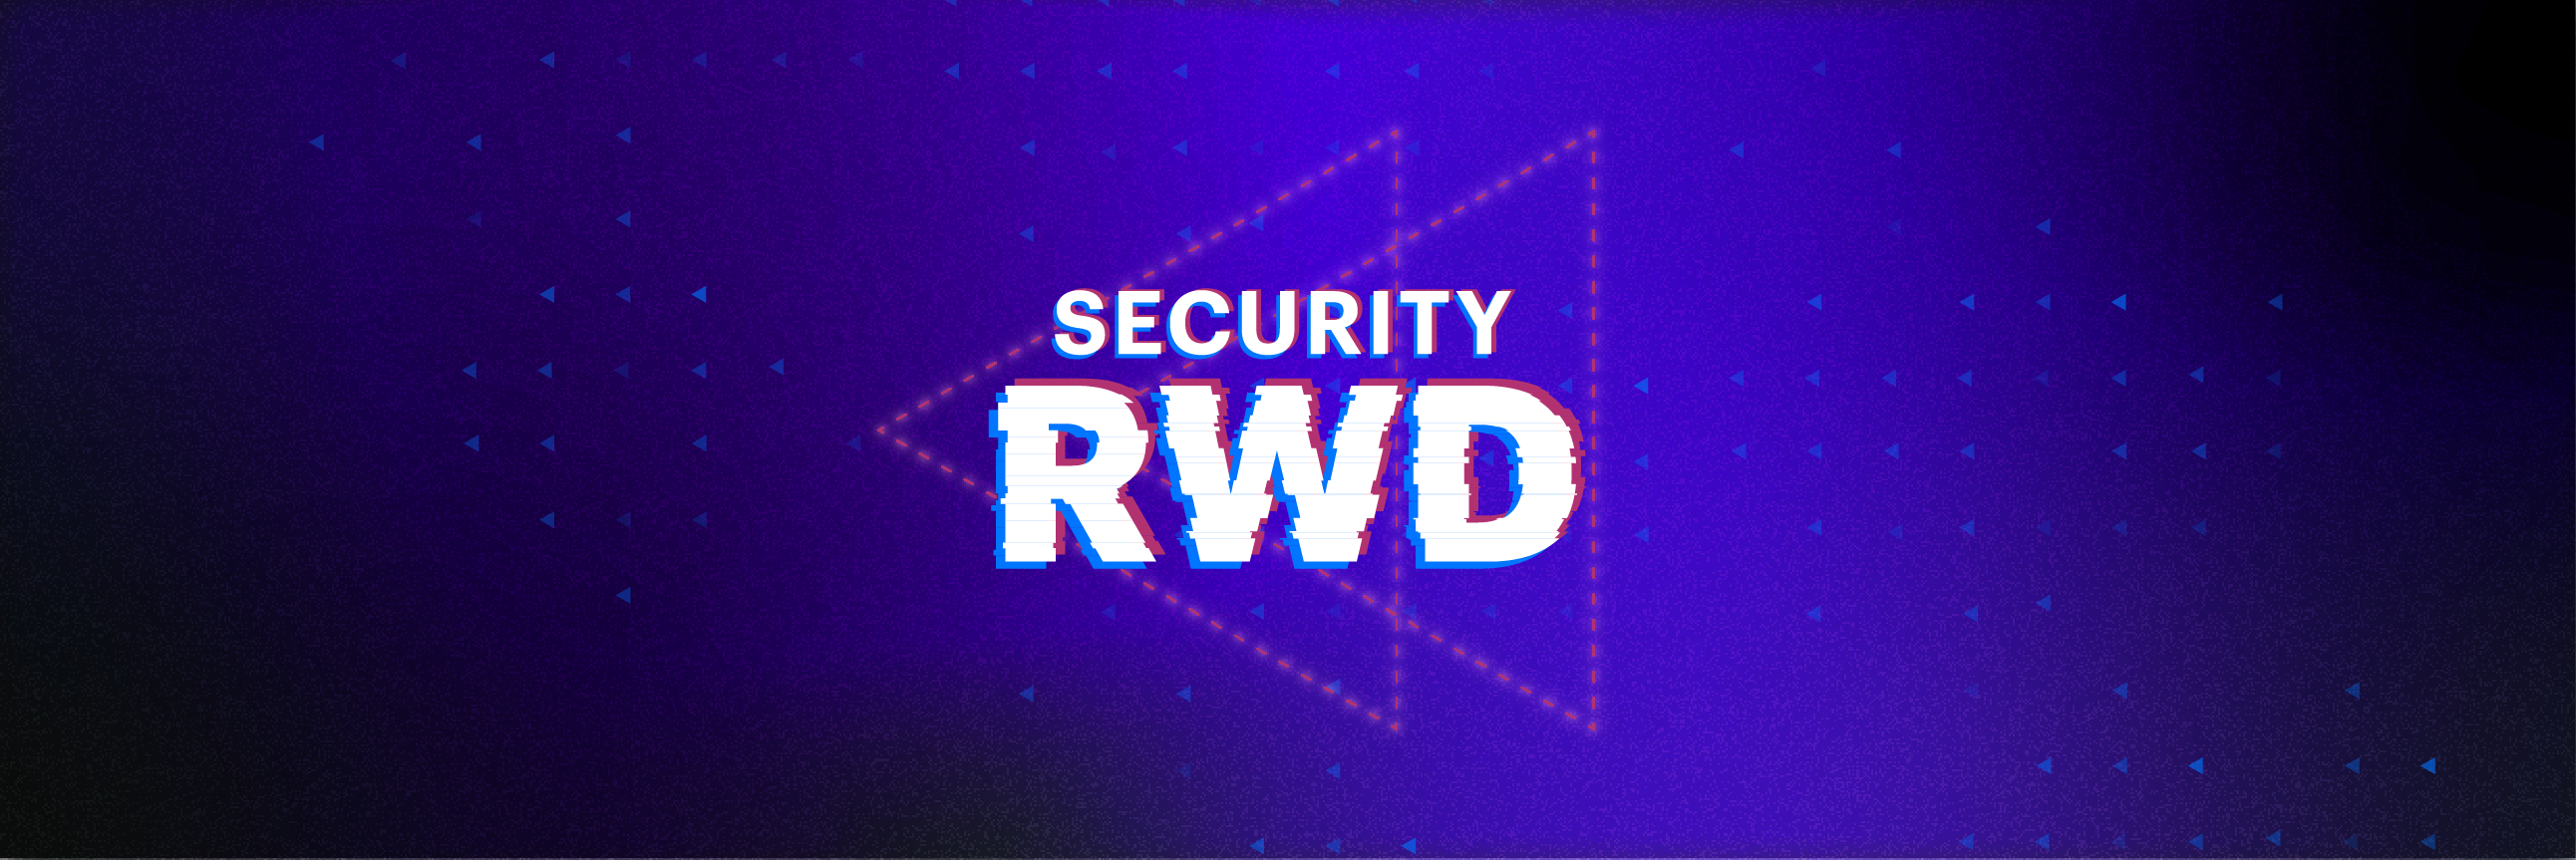 SecurityRWD – GitHub Secret-Scanning Could Create False Sense of Security